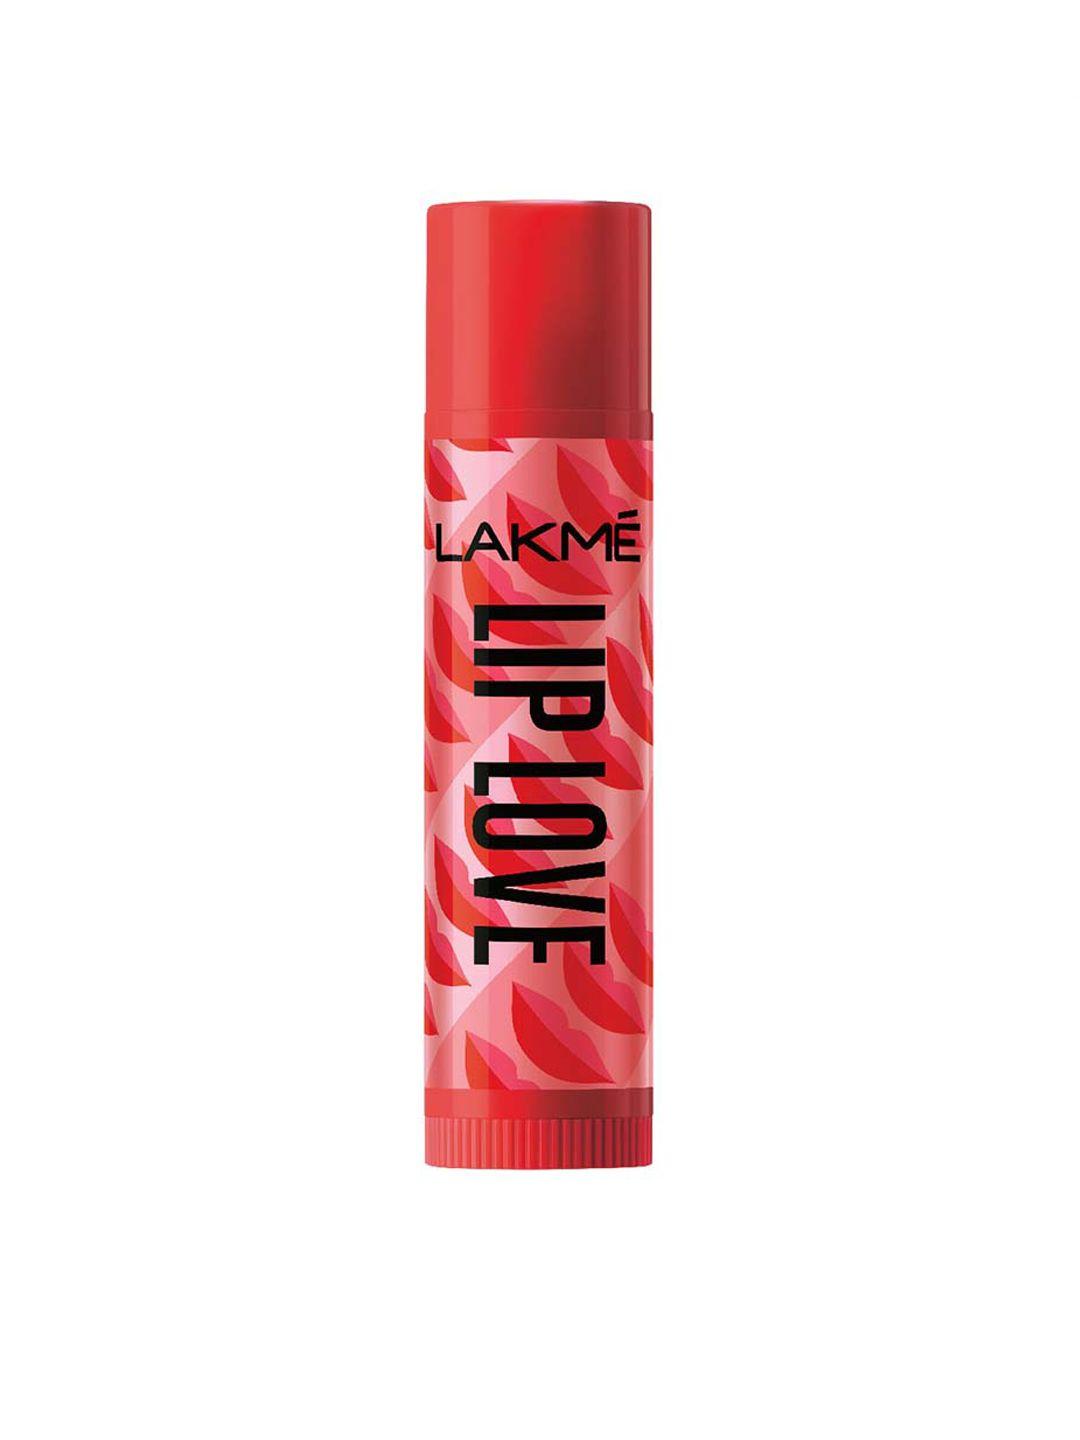 Lakme Lip Love Chapstick SPF 15 - Cherry